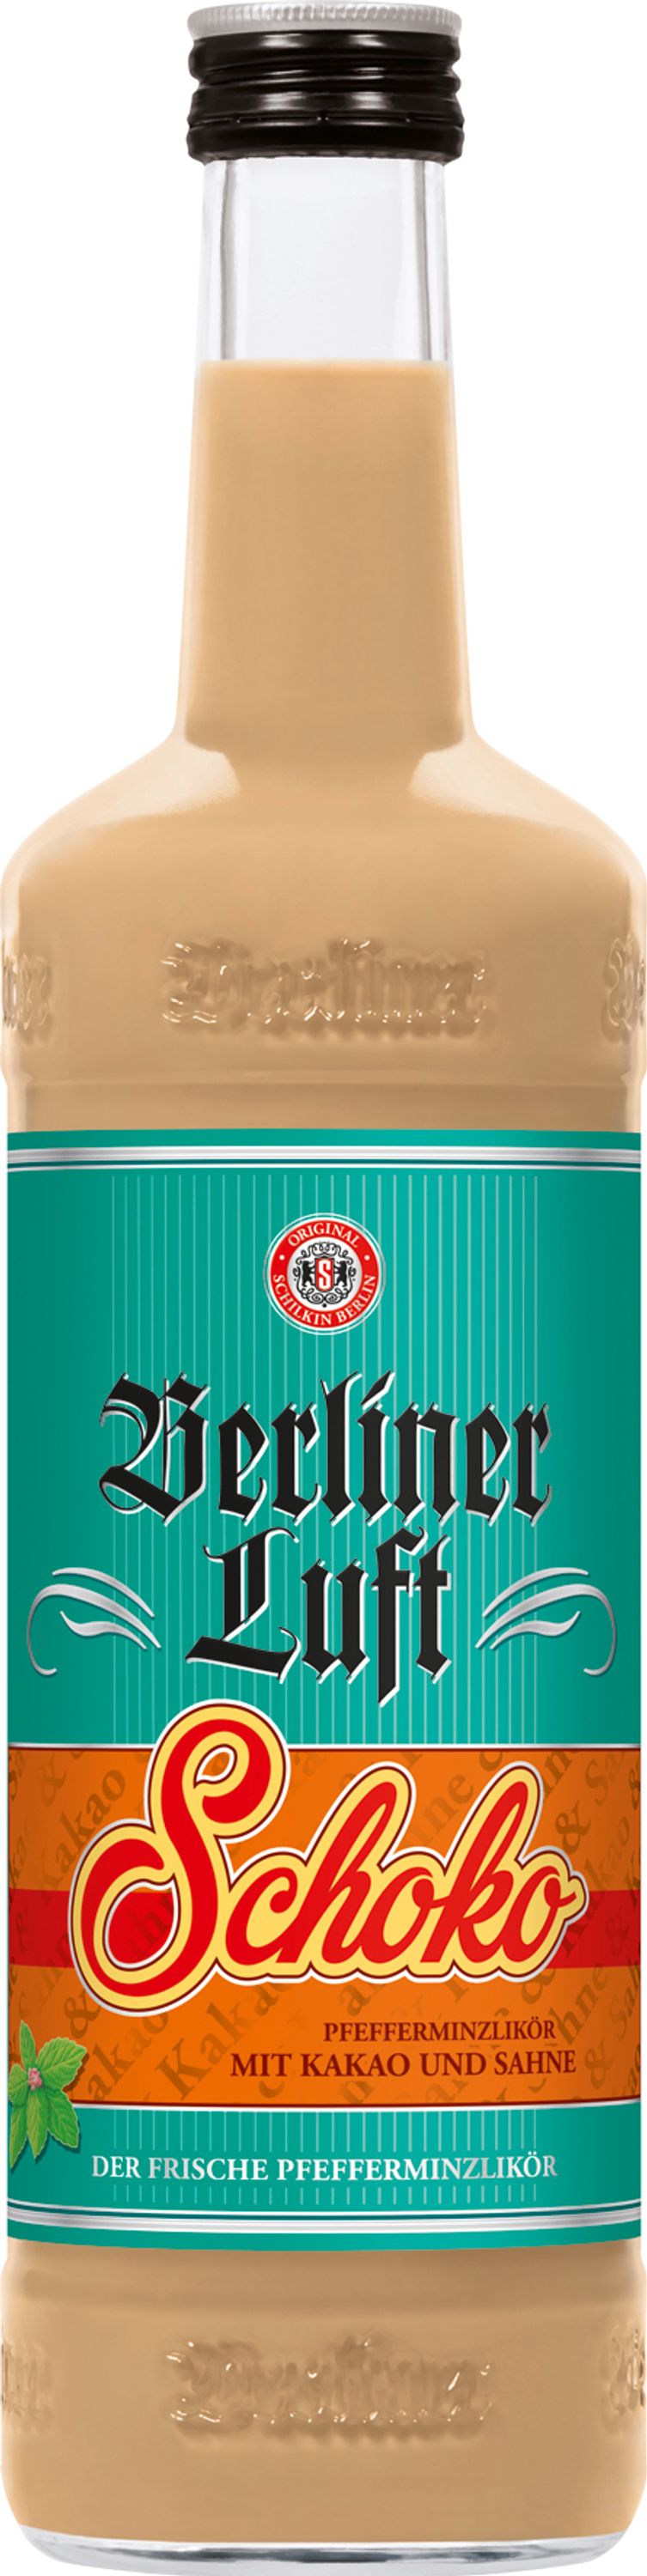 Berliner Luft Schoko Pfefferminzlikör, 0,7l, alc. 15 Vol.-%